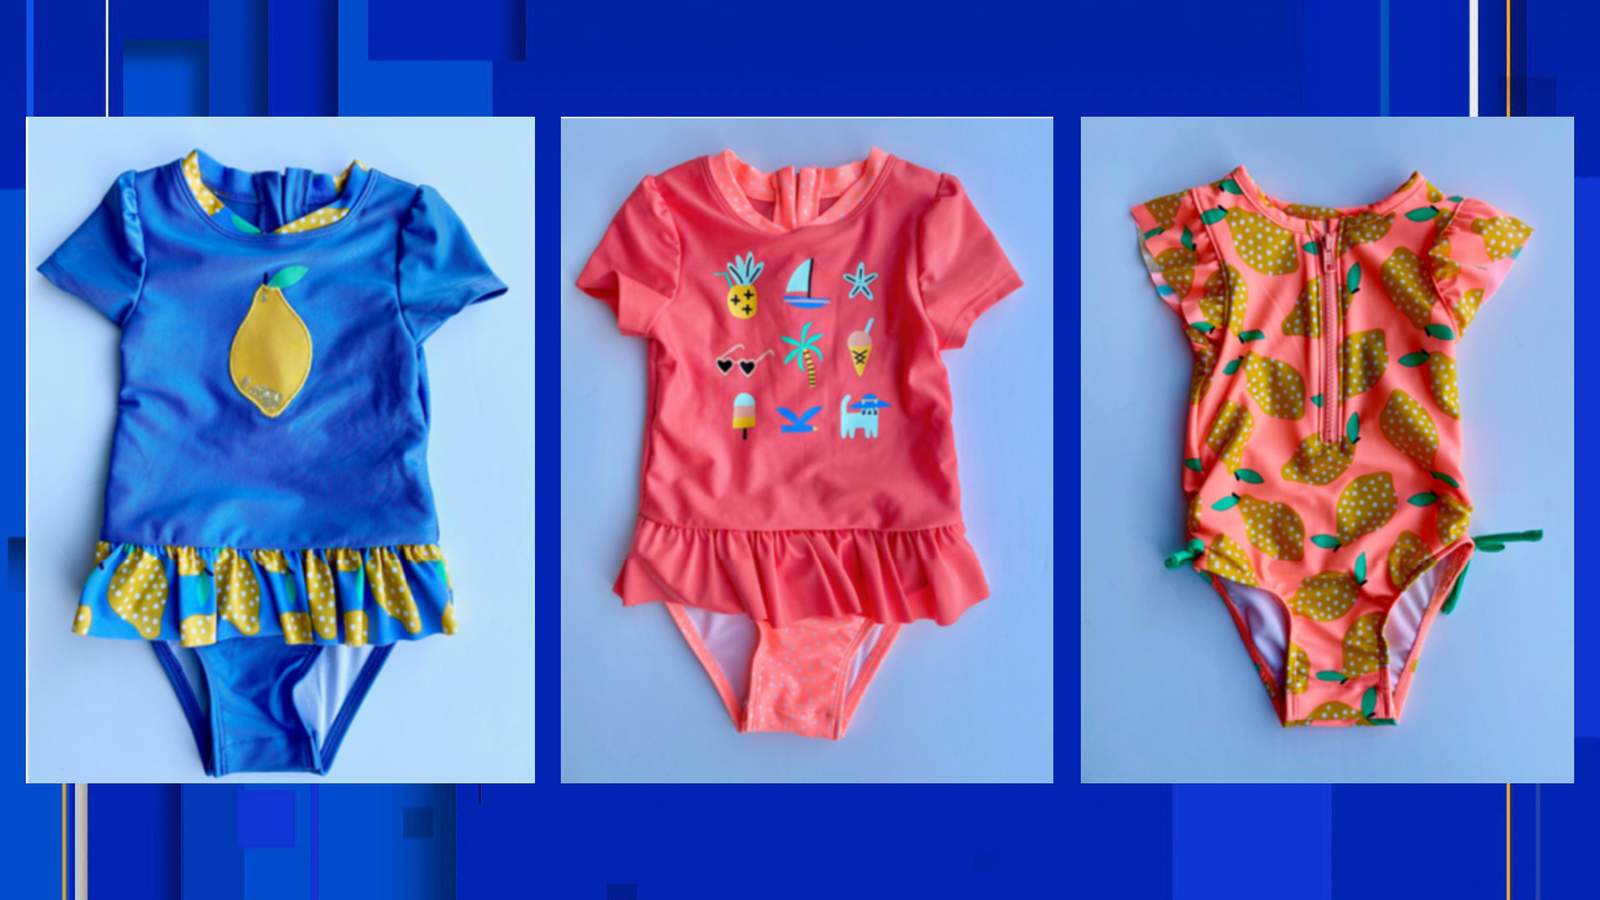 Target recalls 181,000 infant-toddler swimsuits due to potential choking hazard